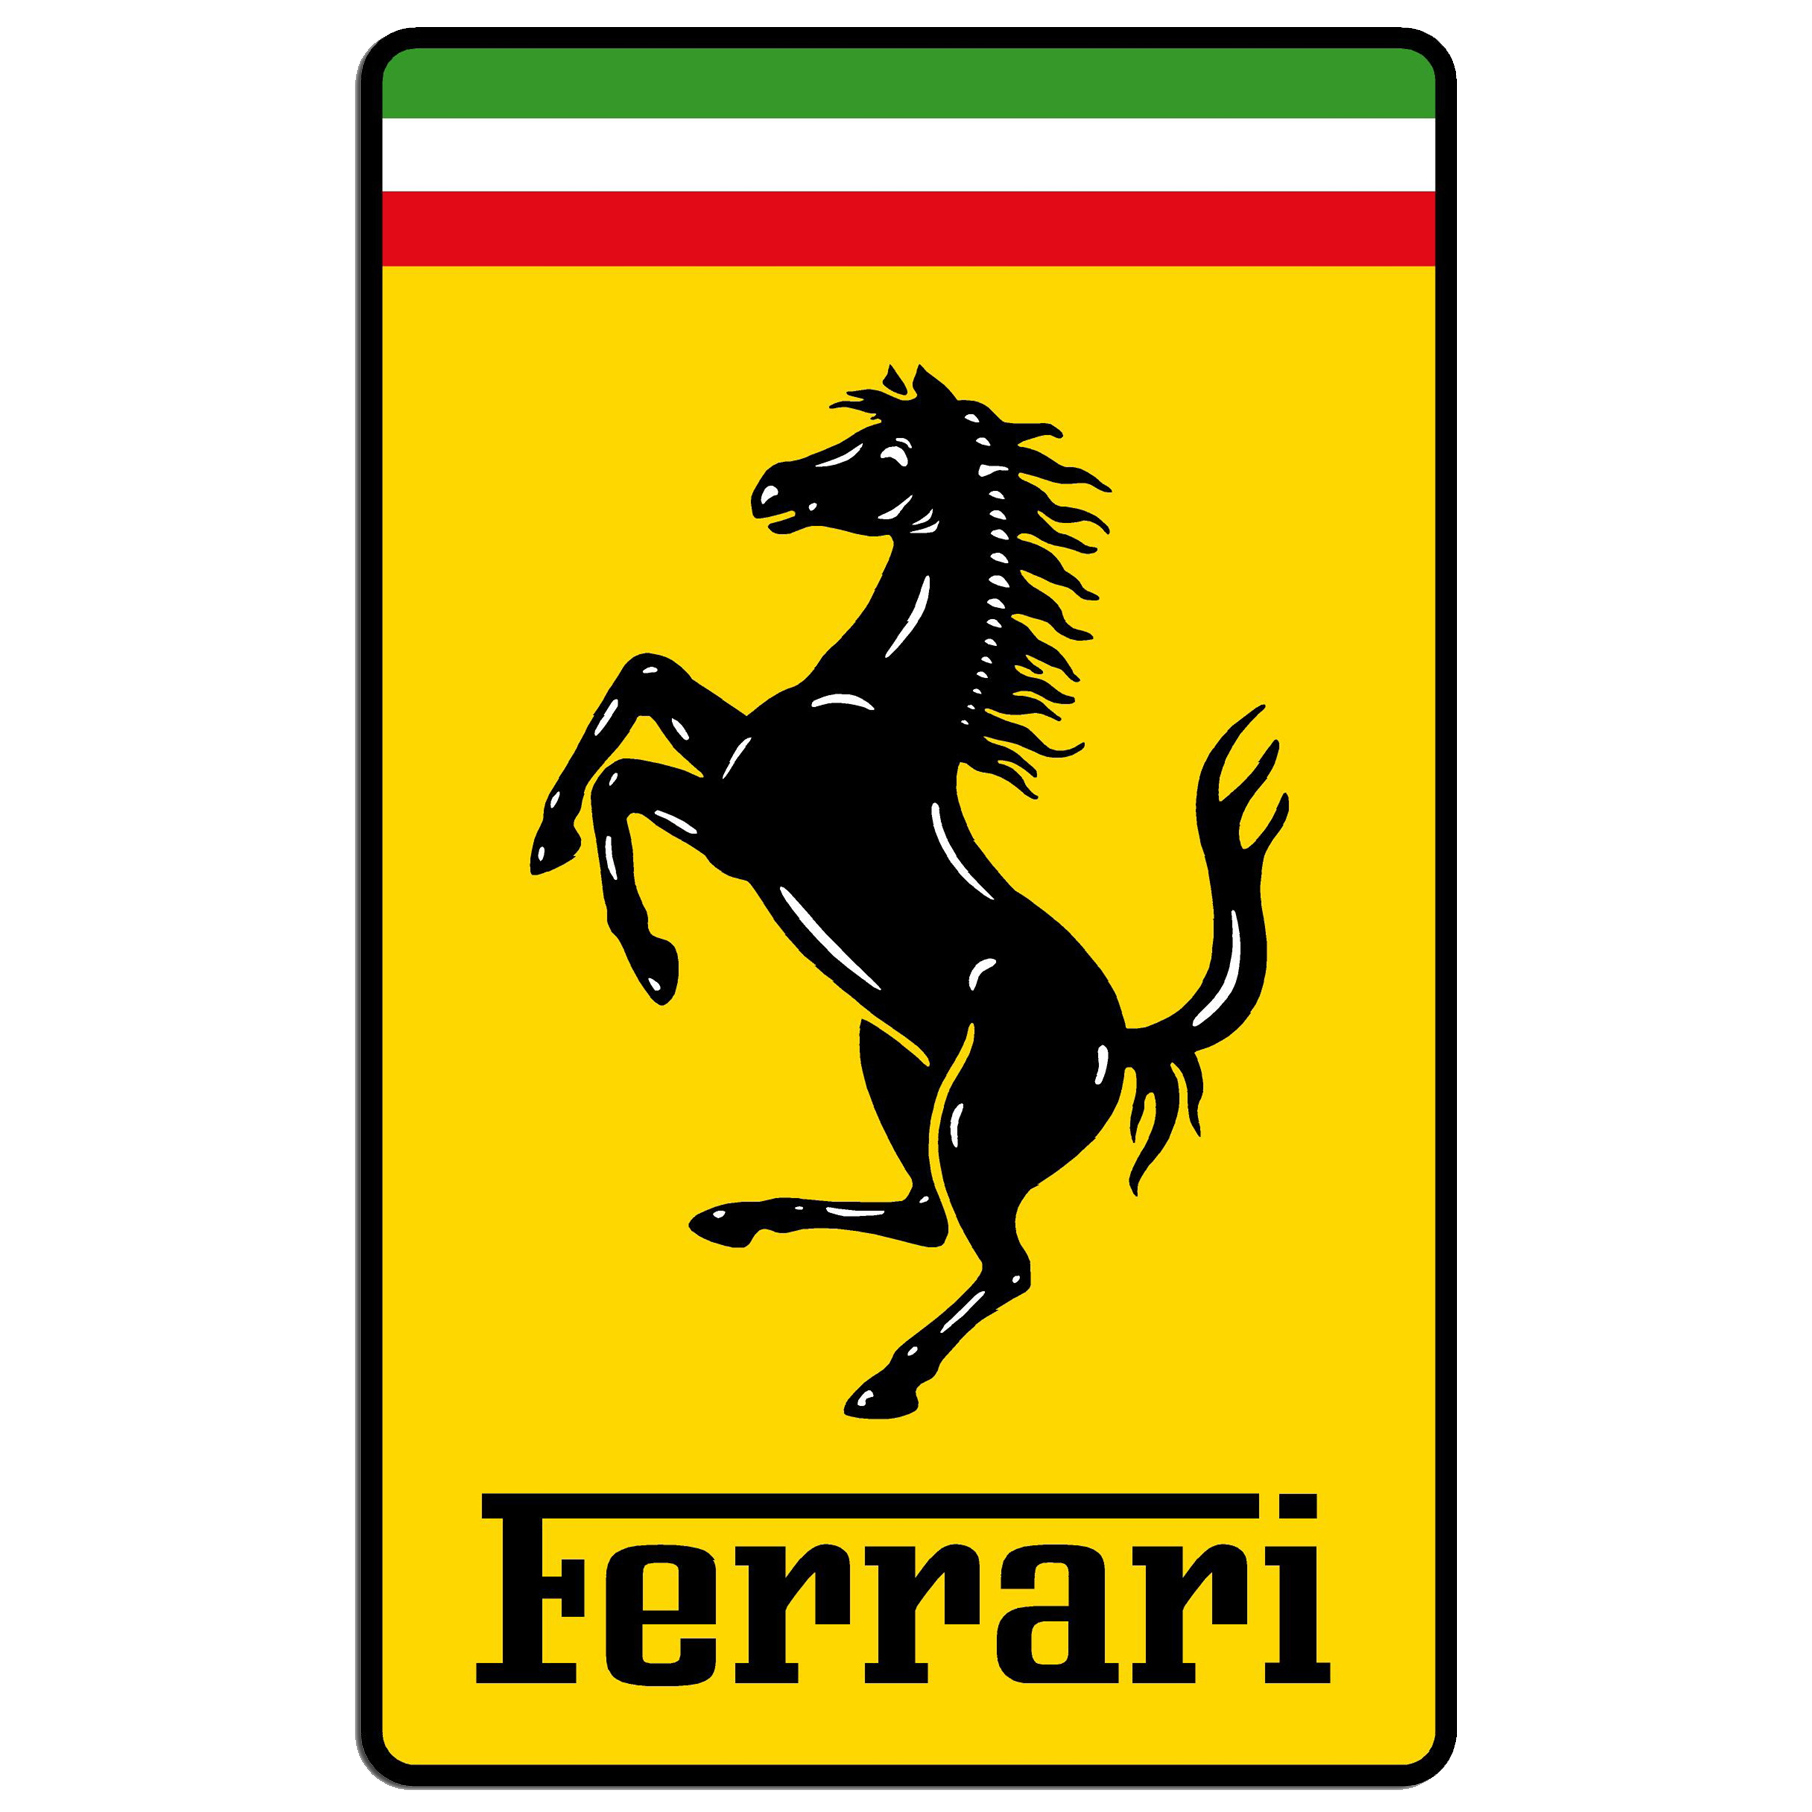 Ferrari 550 (1996 - 2002) for sale